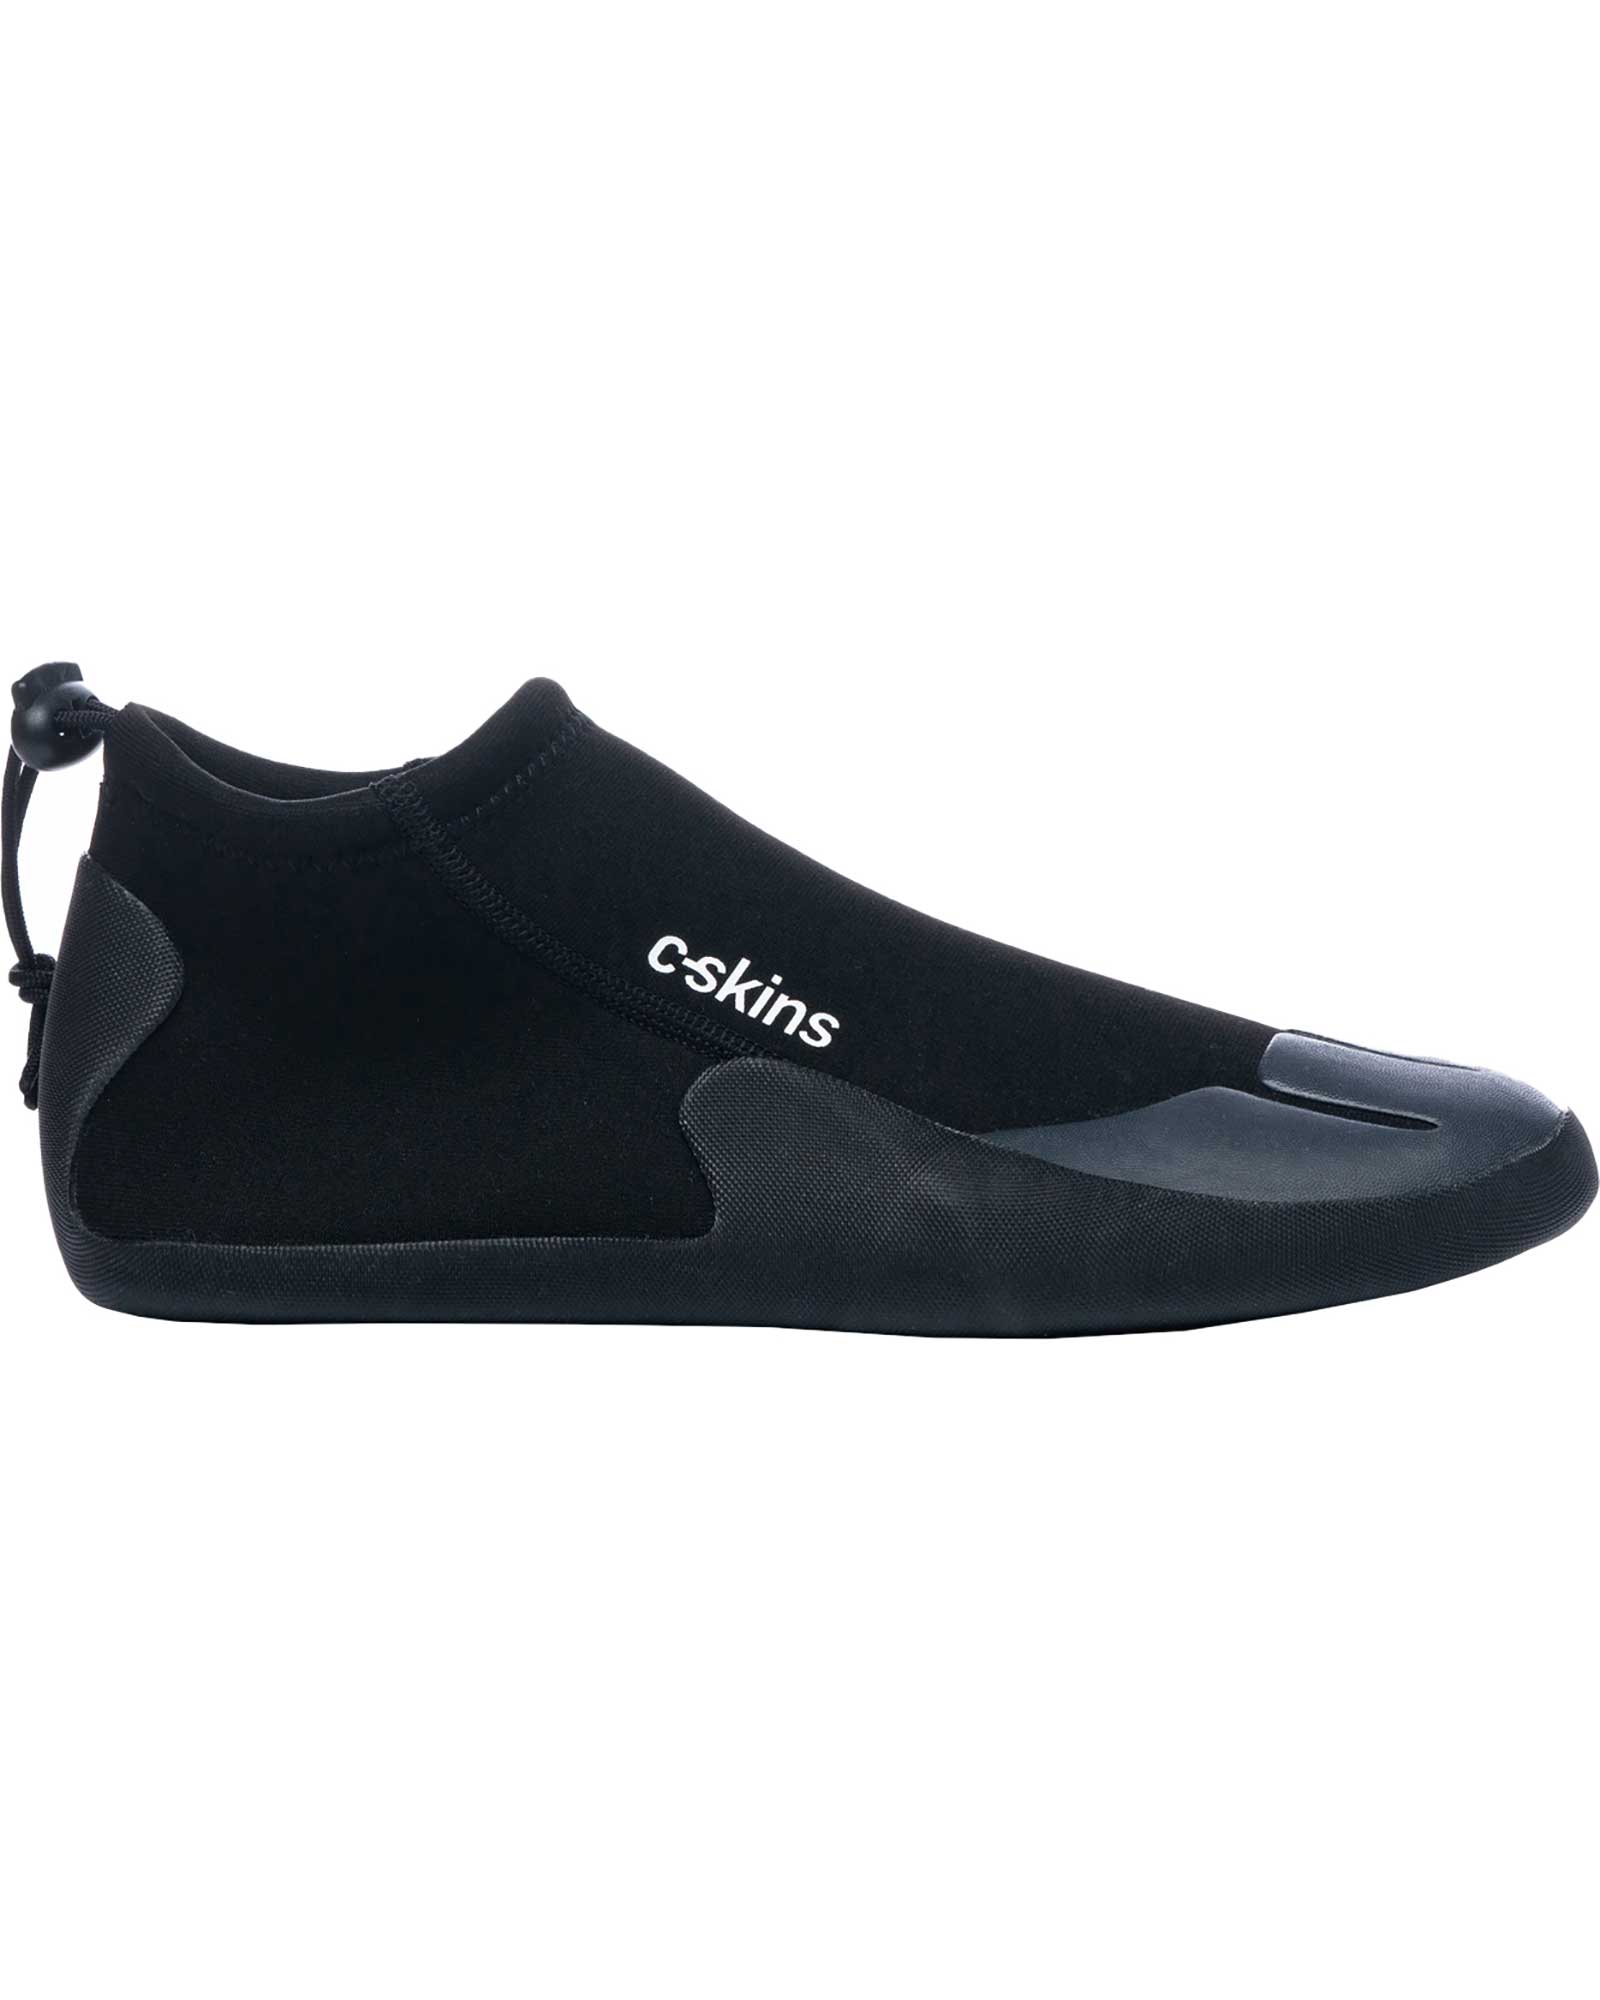 C Skins Legend 3mm Reef Boots - Black/Charcoal UK 10